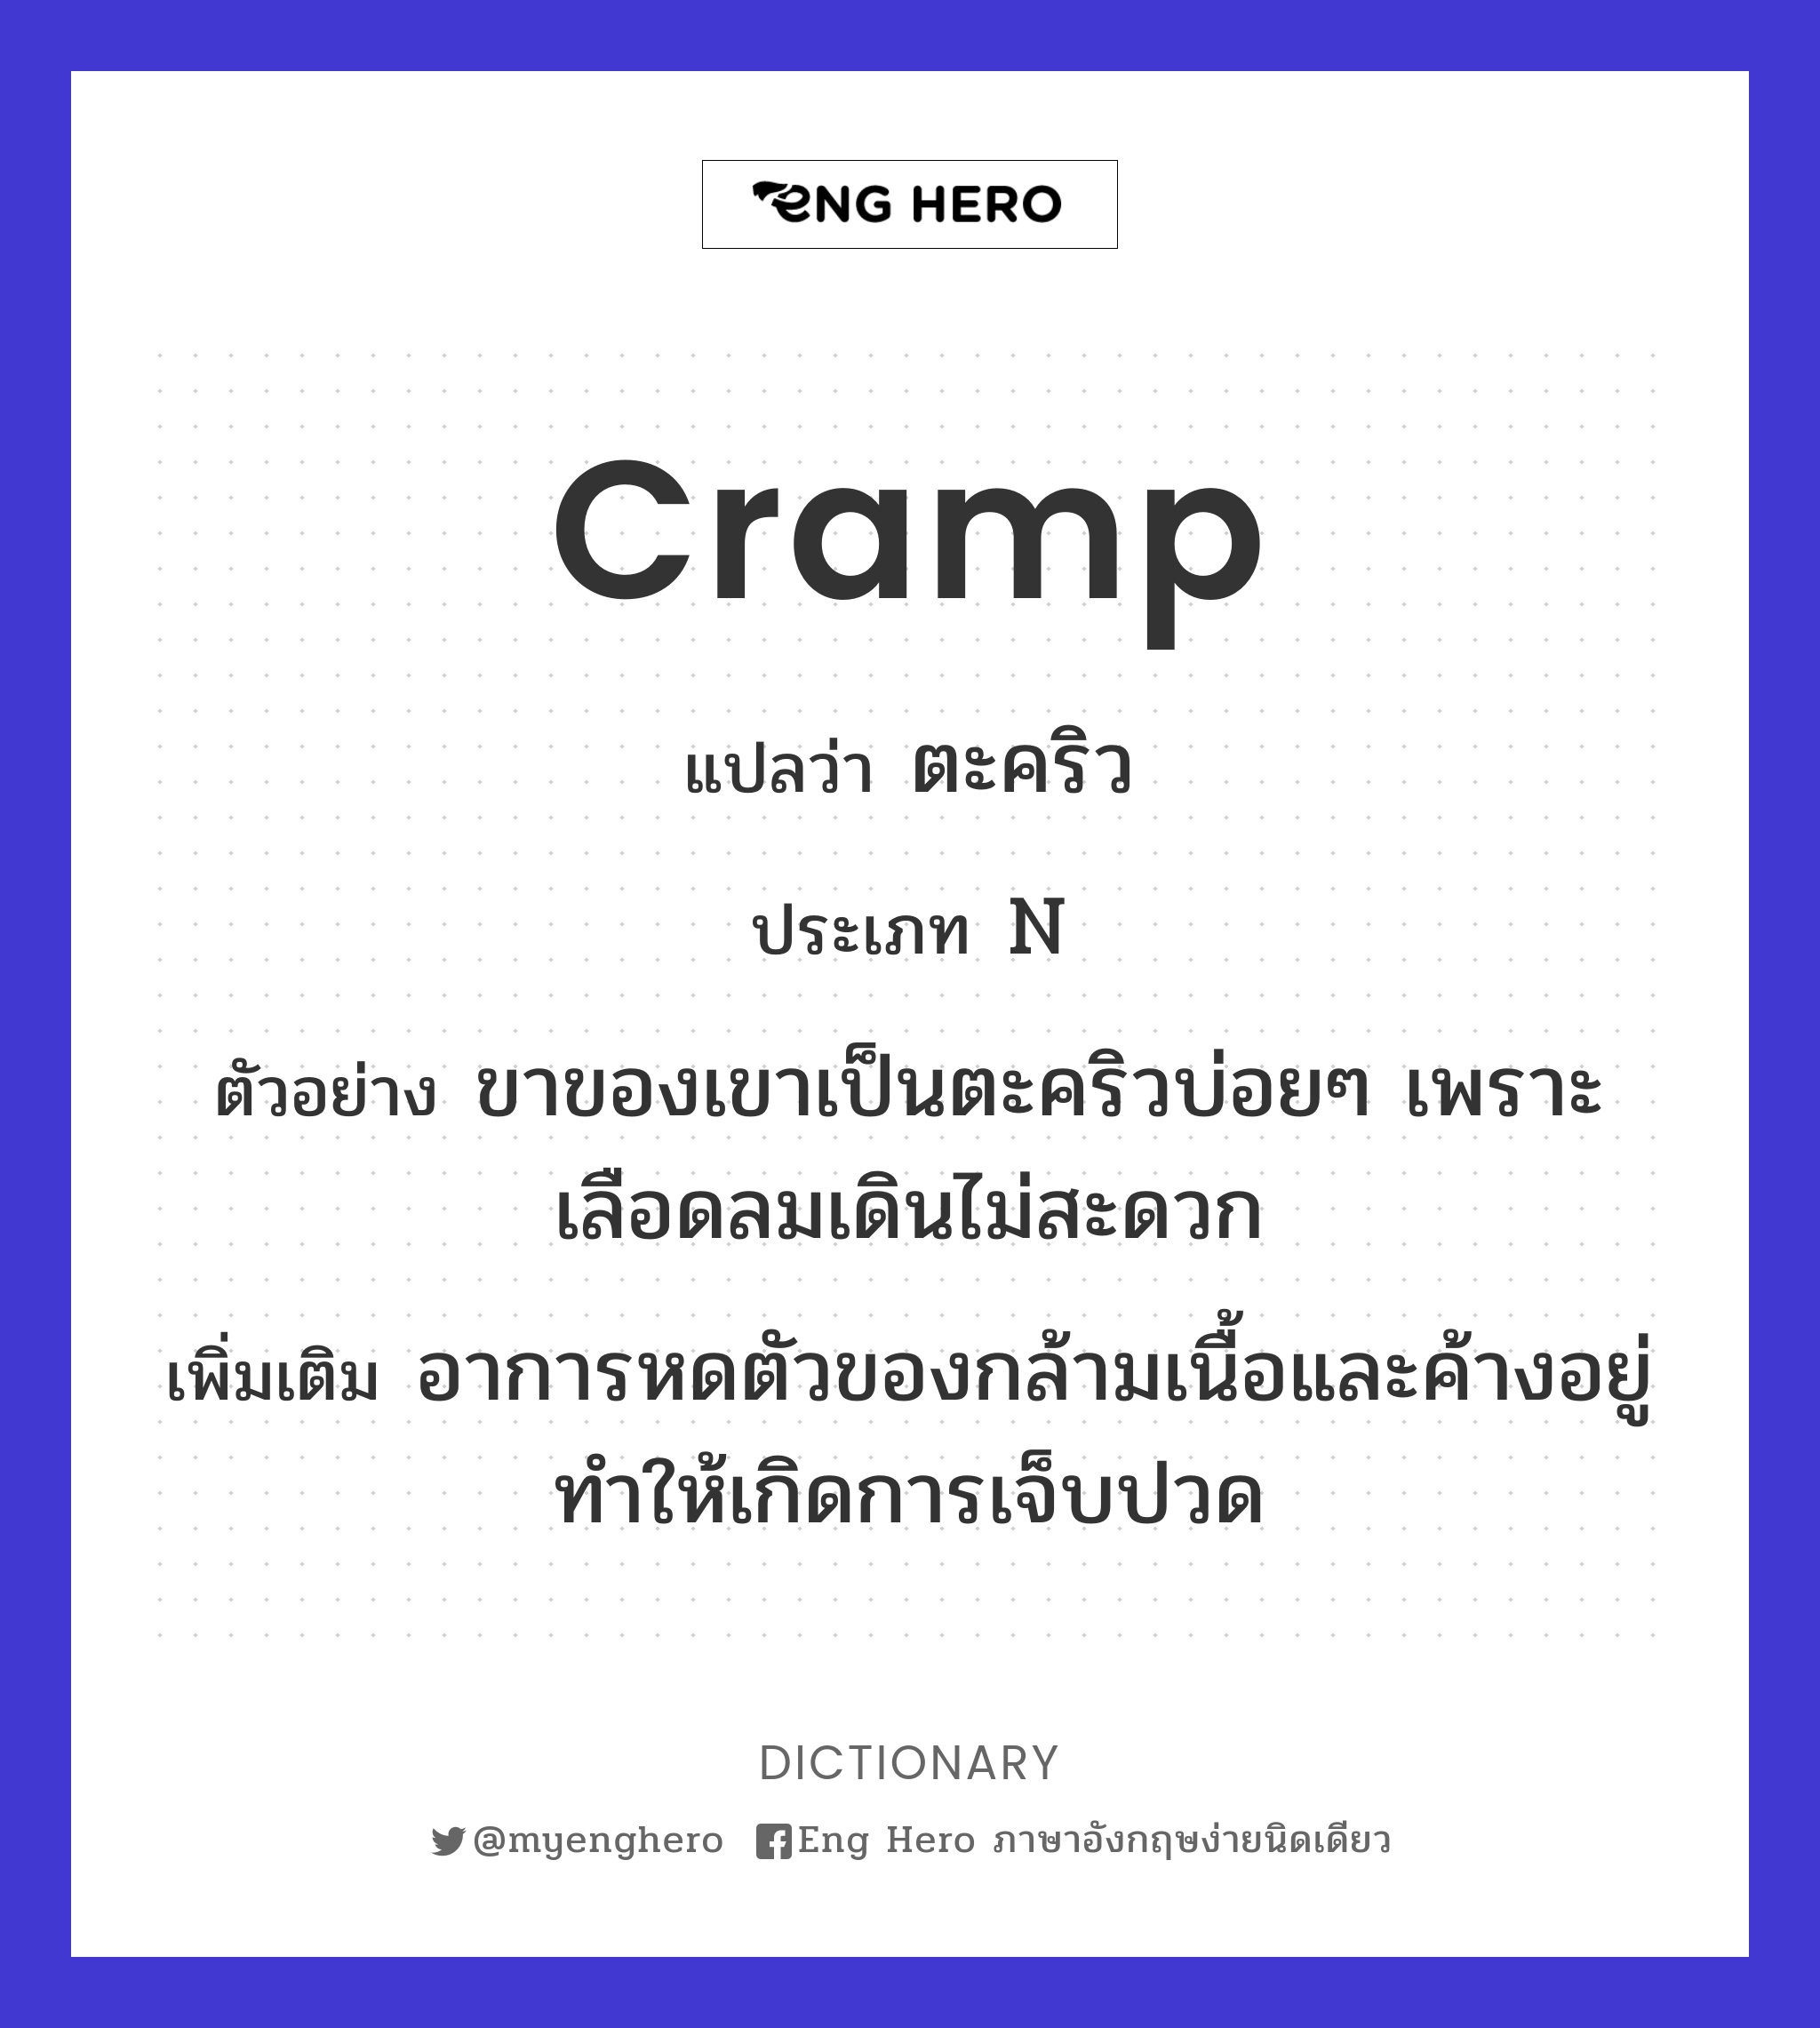 cramp